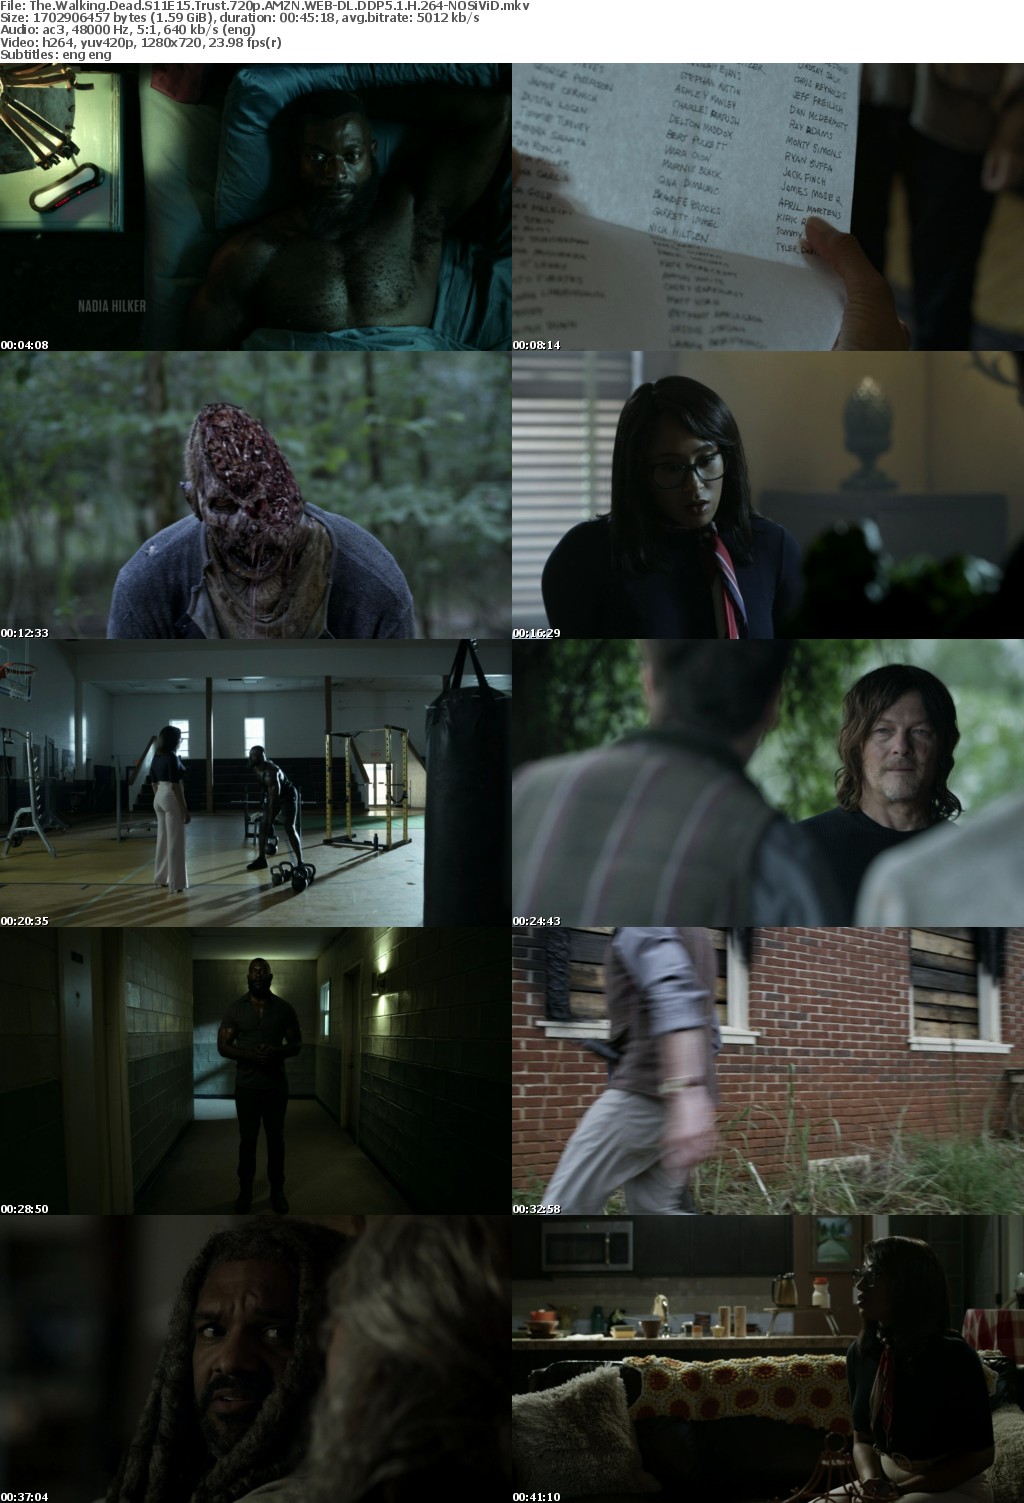 The Walking Dead S11E15 Trust 720p AMZN WEBRip DDP5 1 x264-NOSiViD